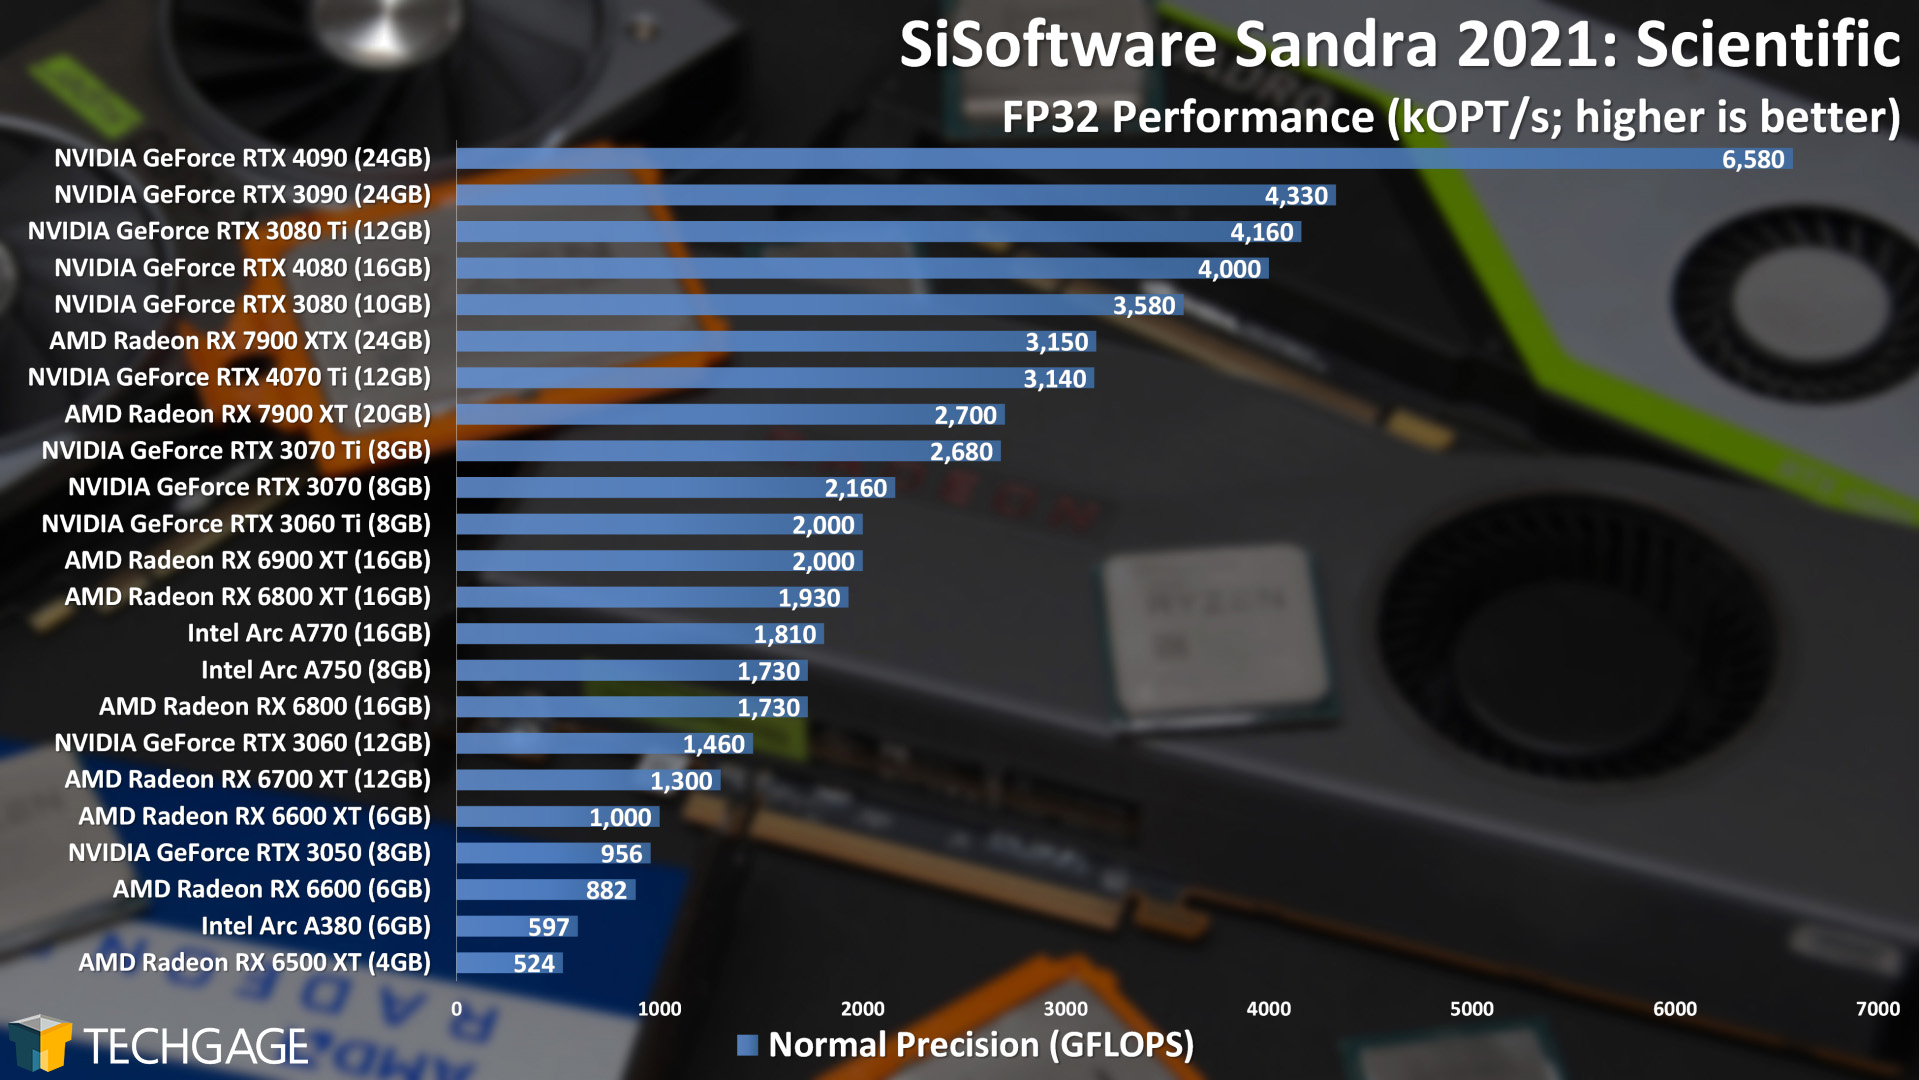 SiSoftware Sandra - Scientific Performance (FP32)